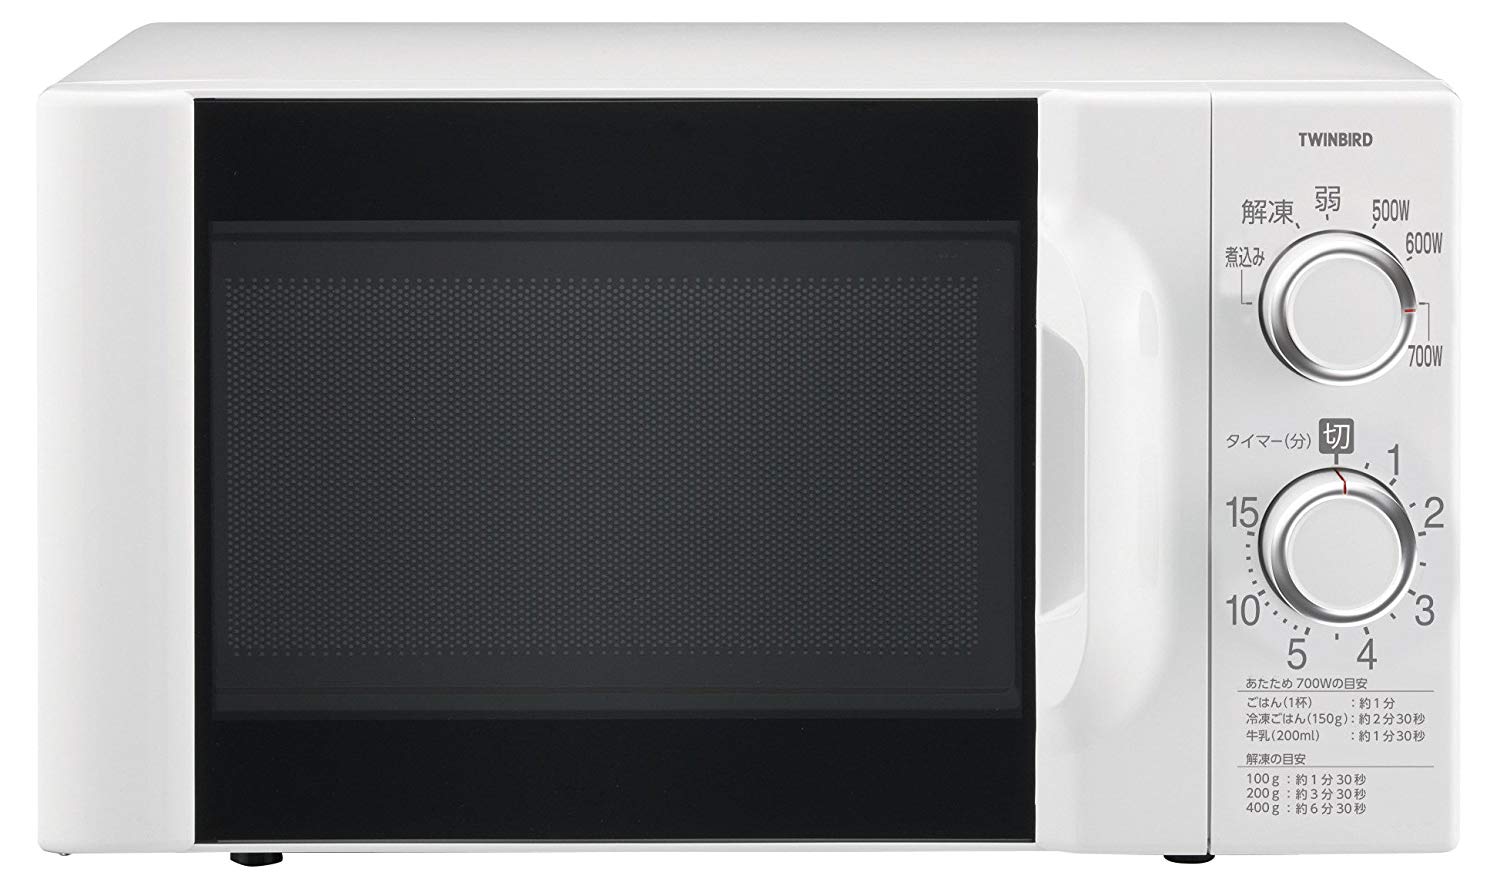 Twin Bird microwave 50Hz dedicated White DR-D419W5